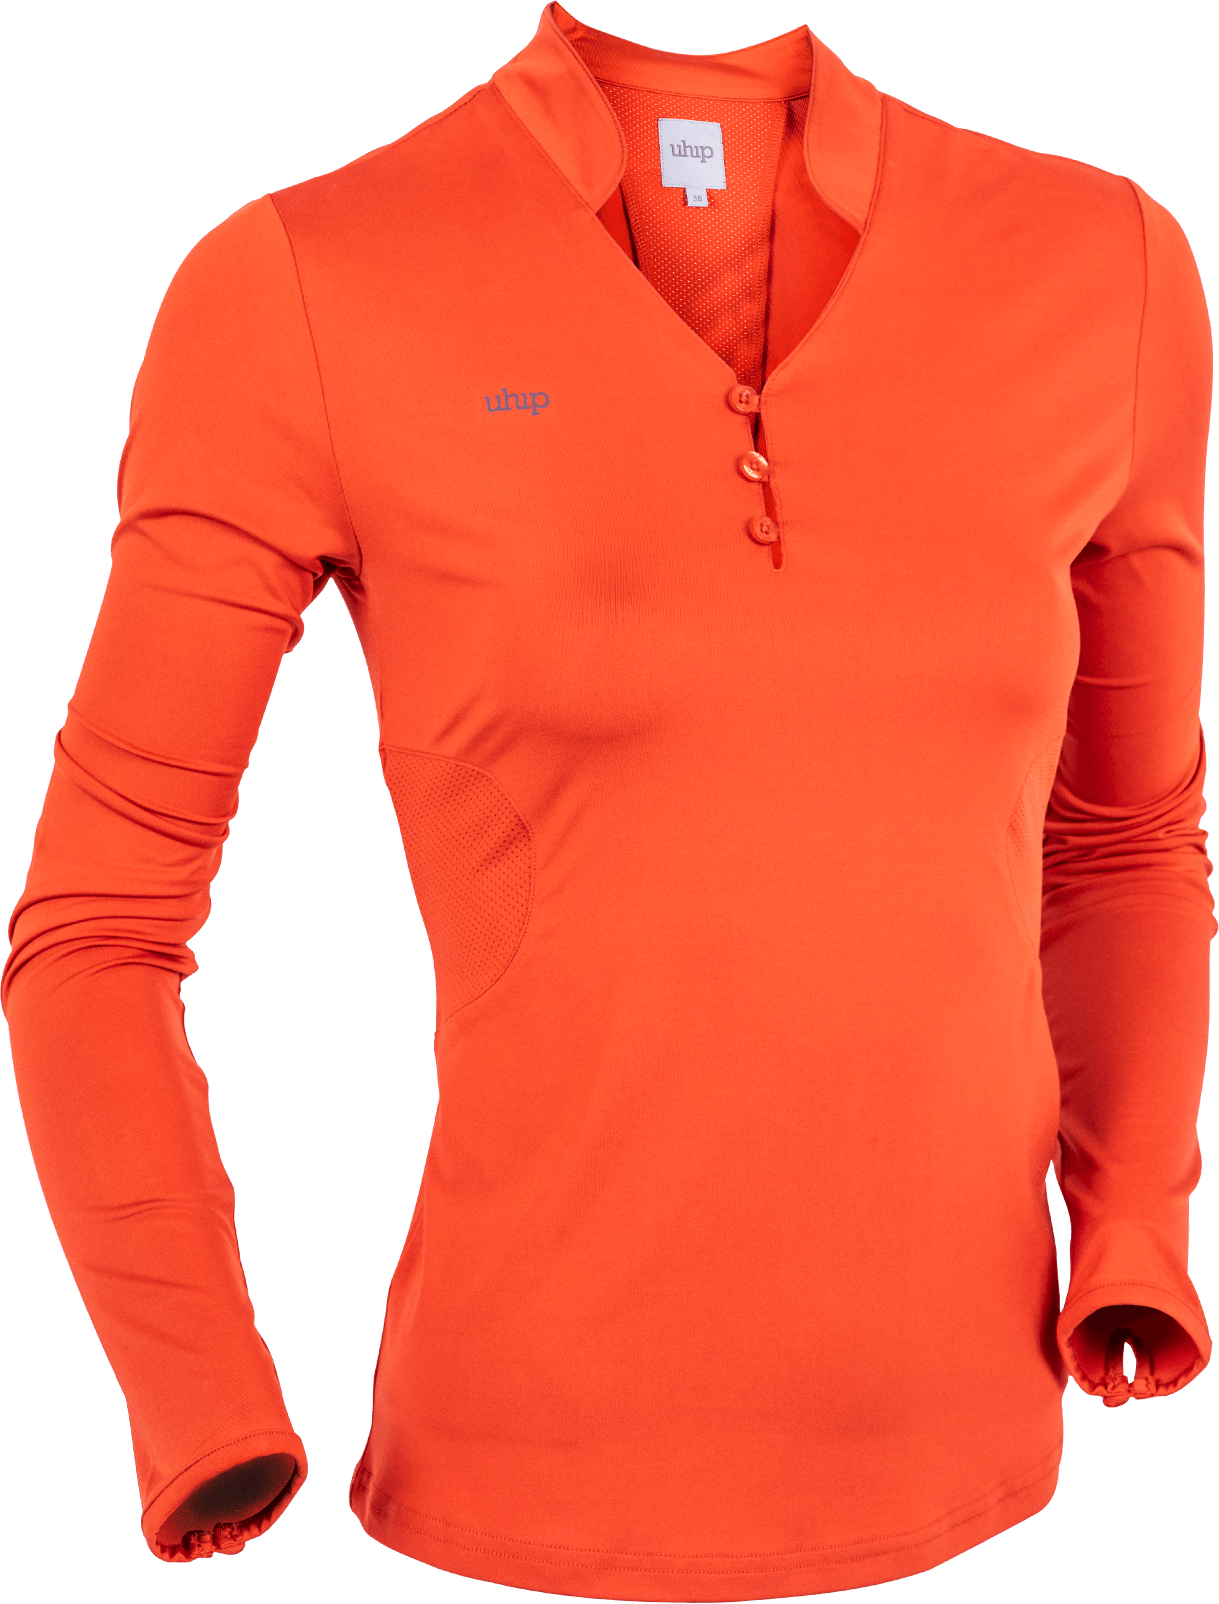 NEW 2021 Uhip Technical LONG Sleeve Top Orange Rust